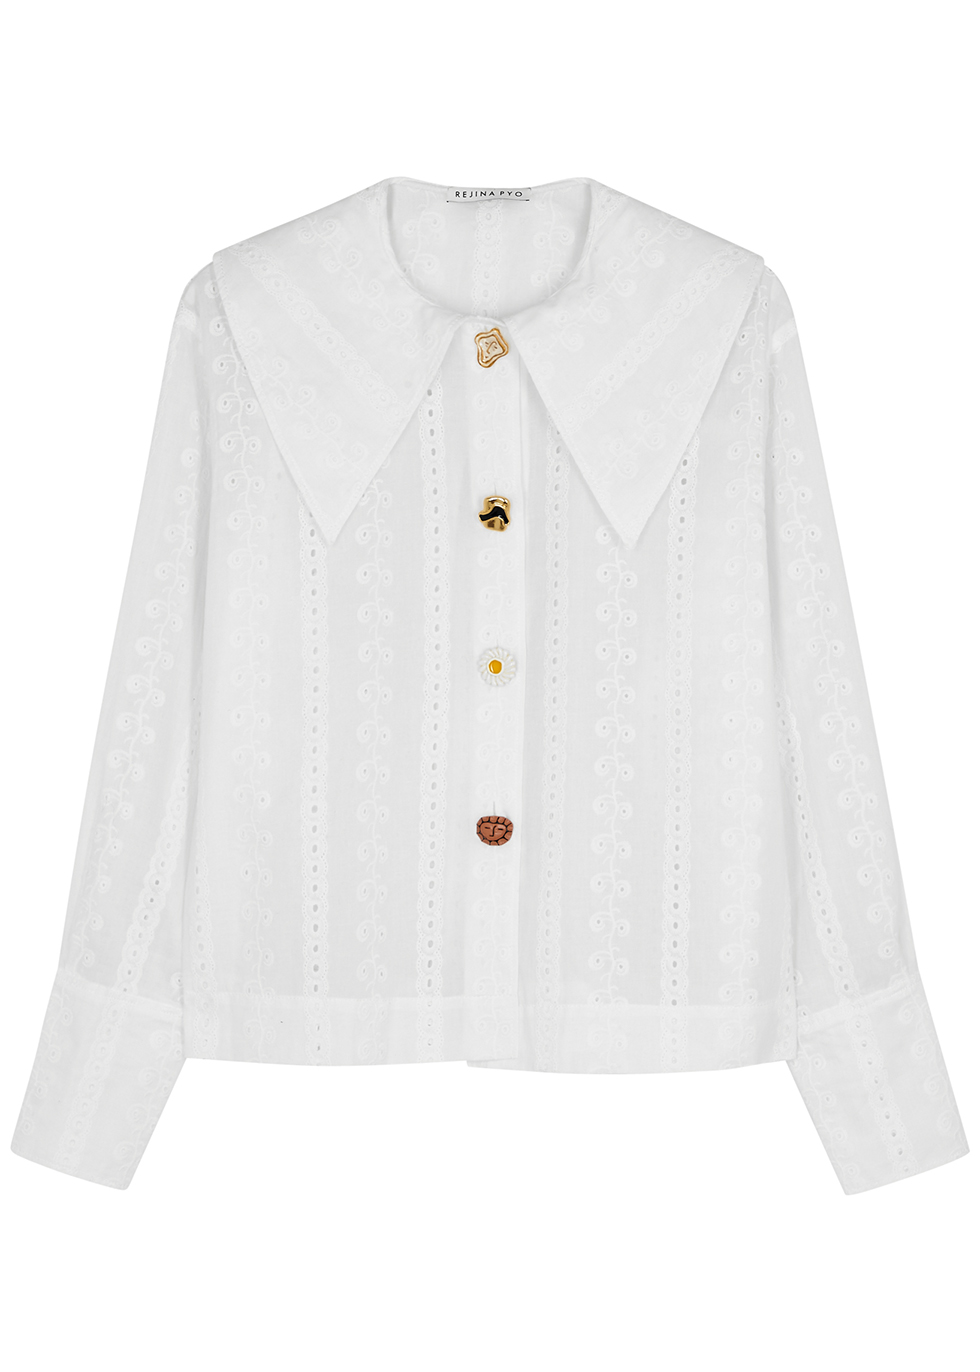 Elliot white broderie anglaise blouse